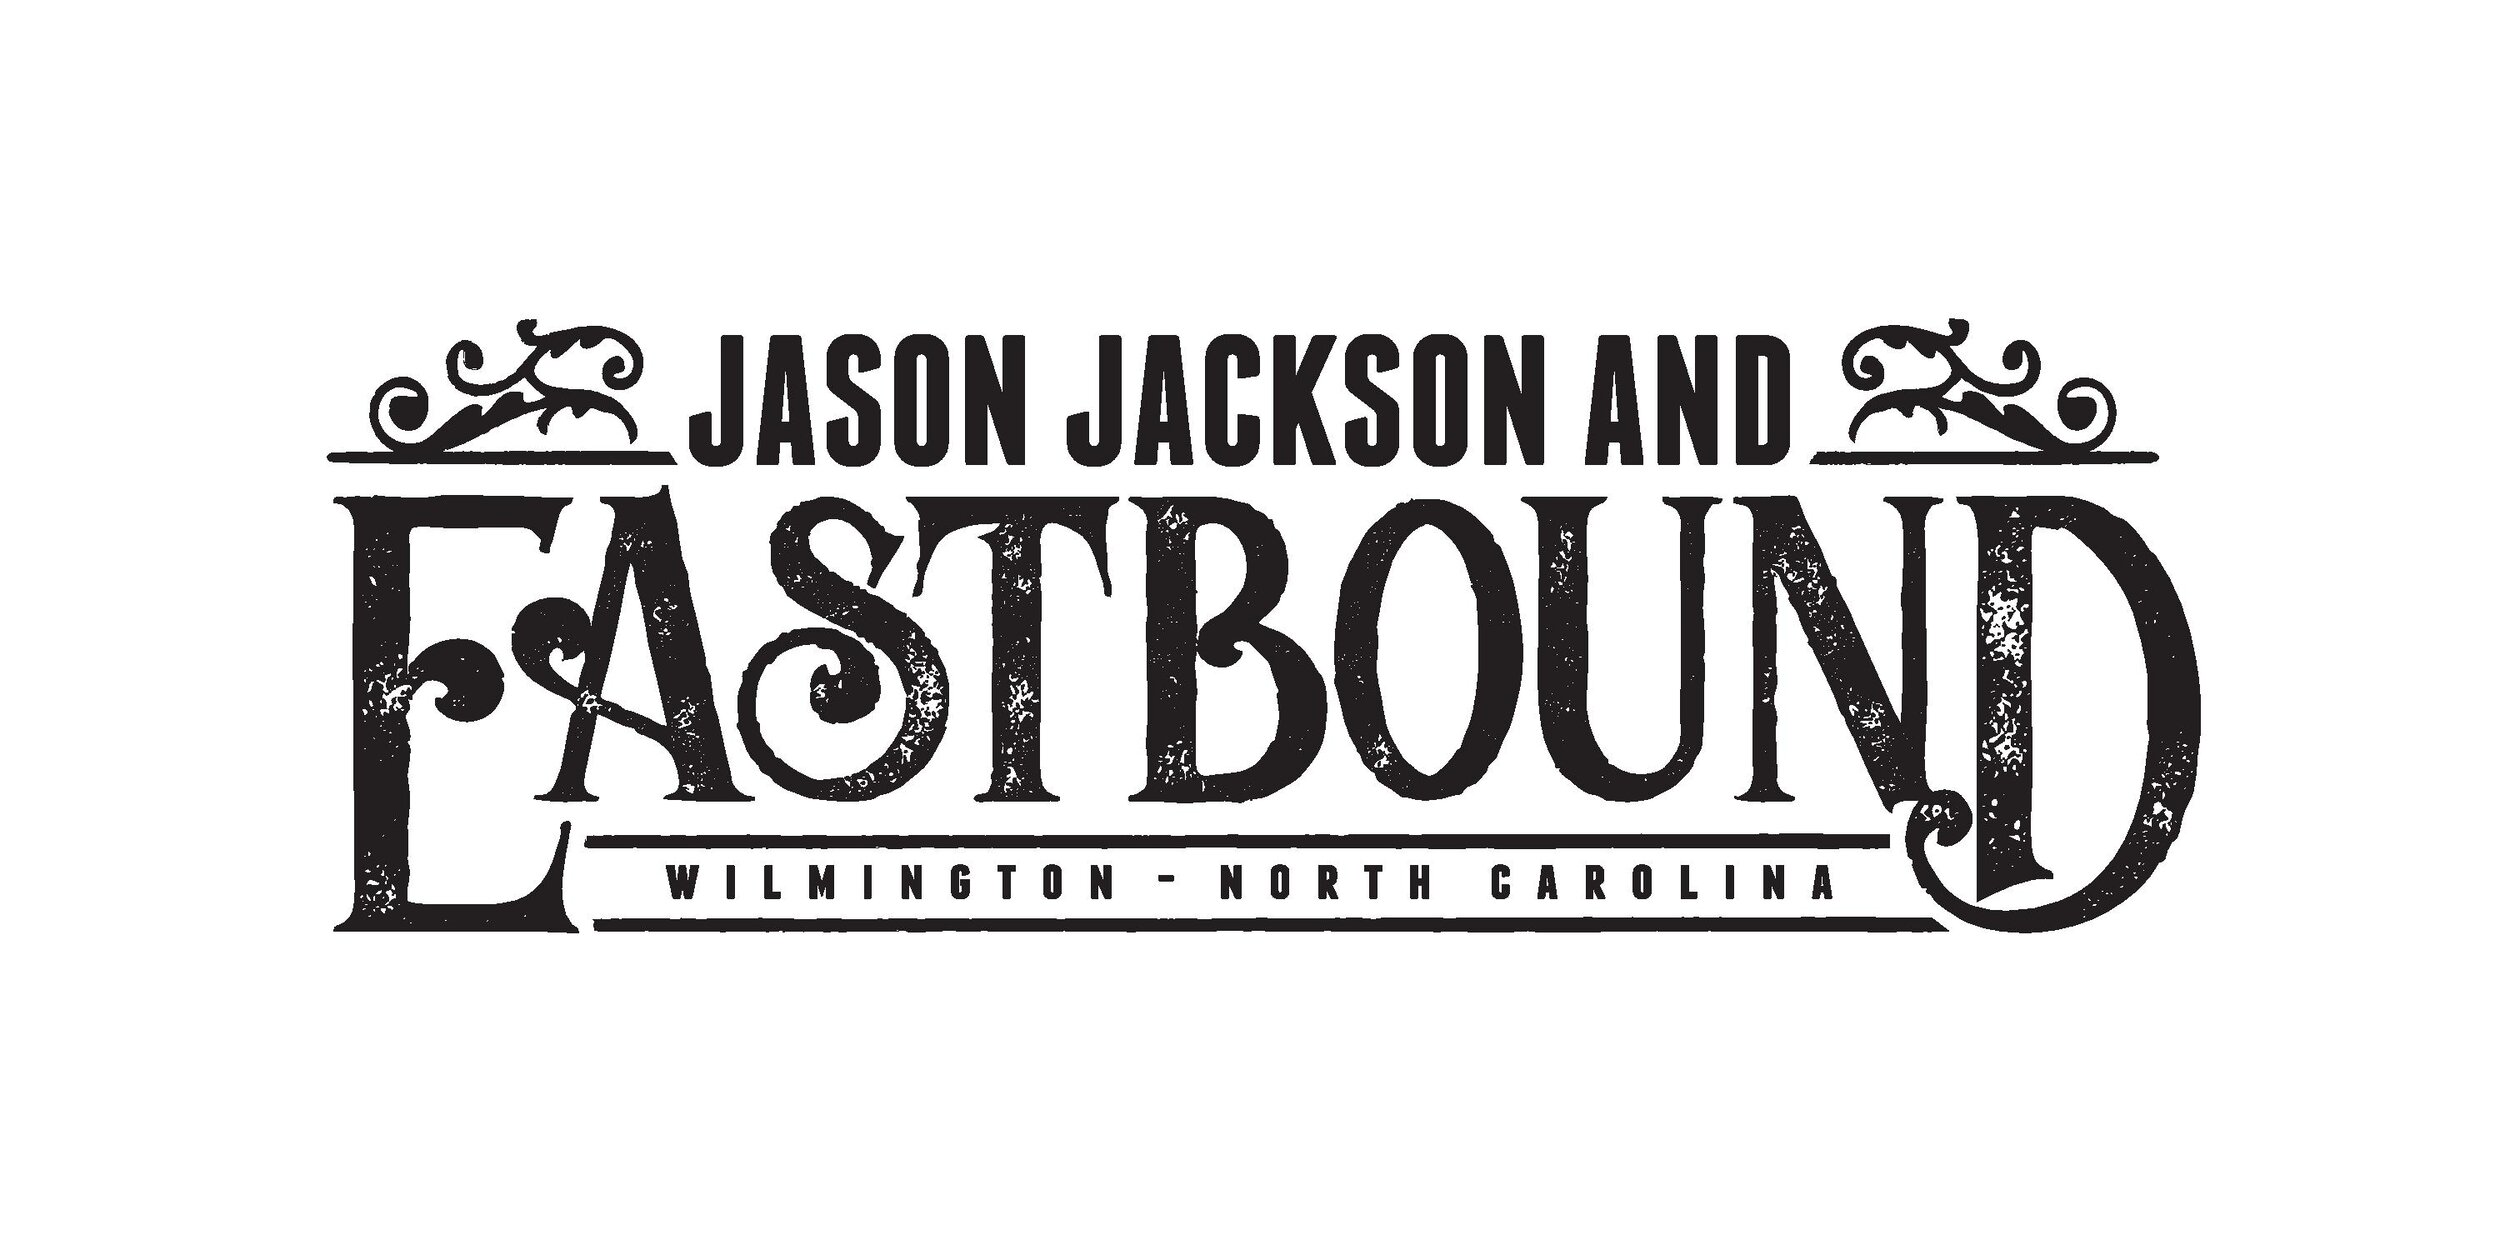 Jason Jackson and eastbound logo pdf-page-001.jpg